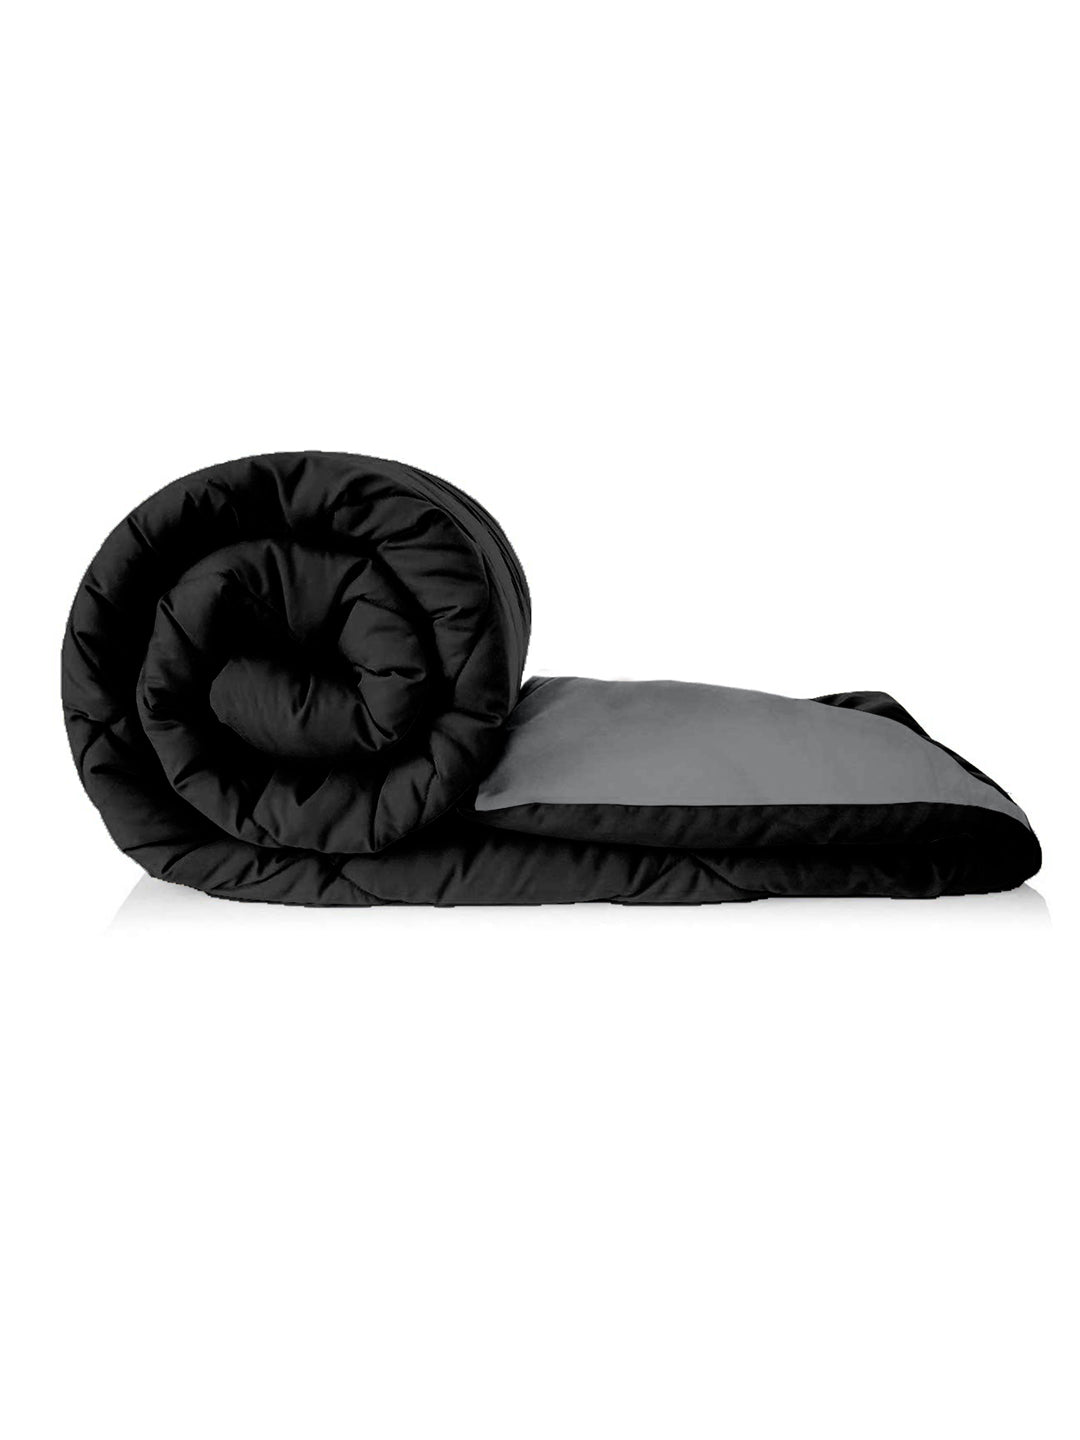 Black & Grey Microfiber comforter for Mild Winter